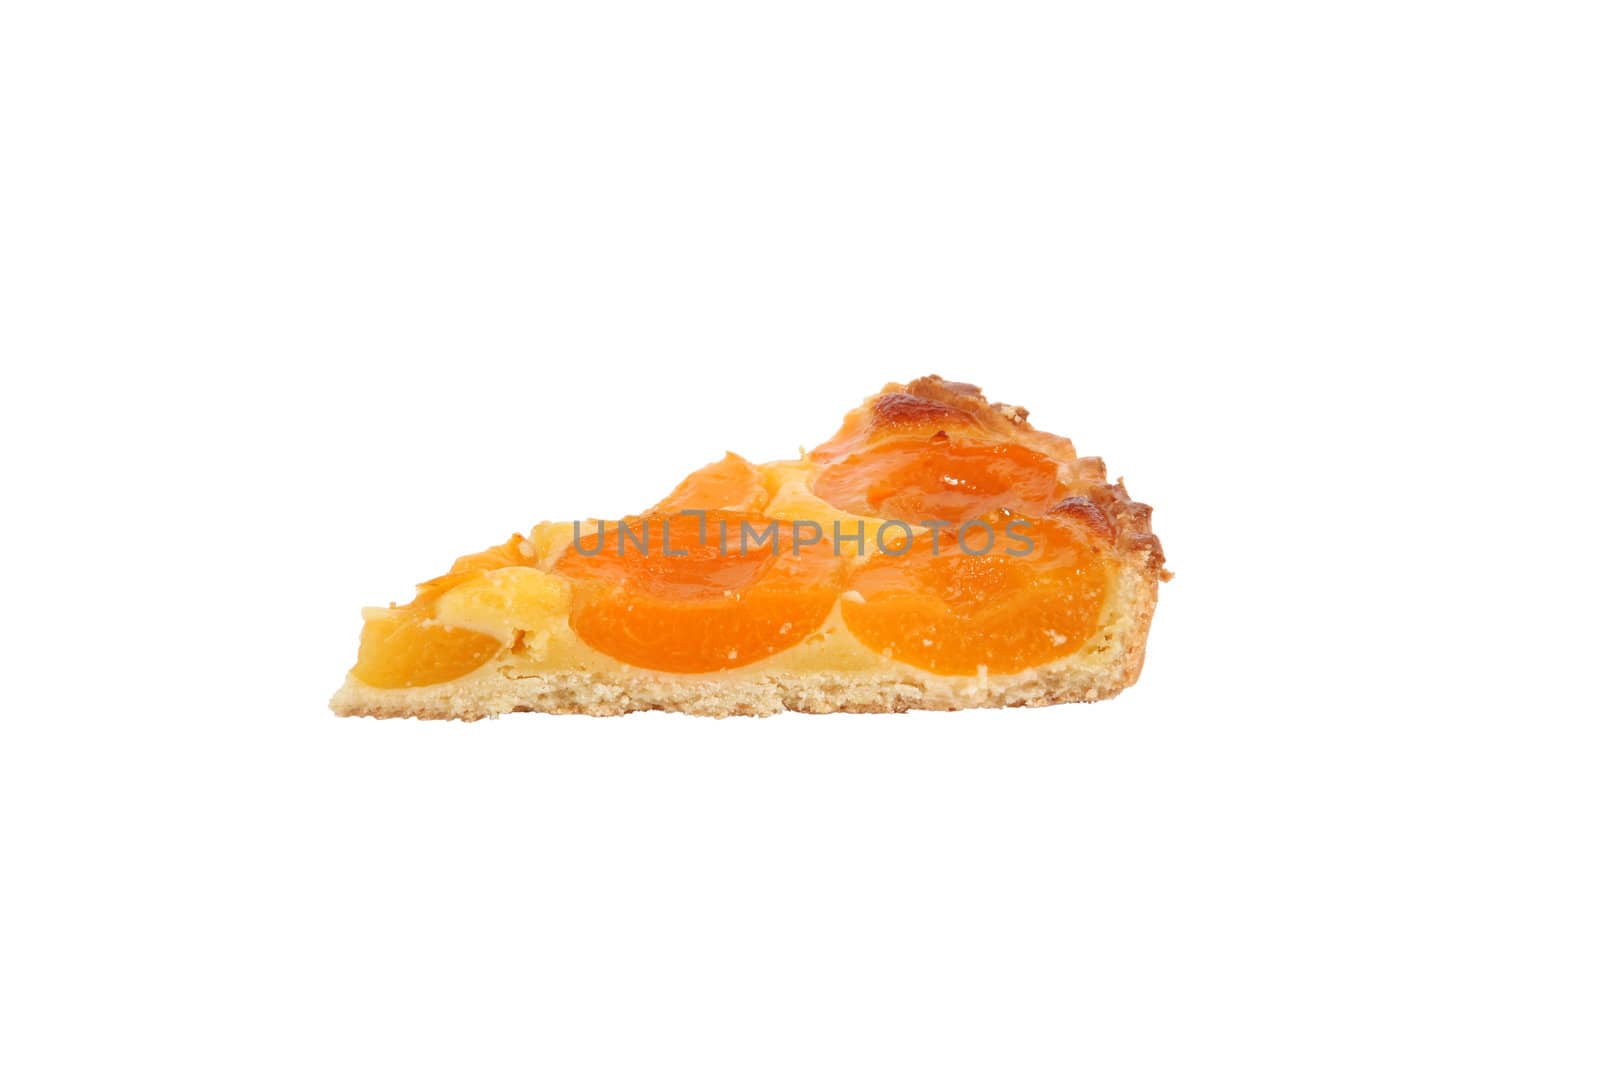 A slice of Mirabelle tart